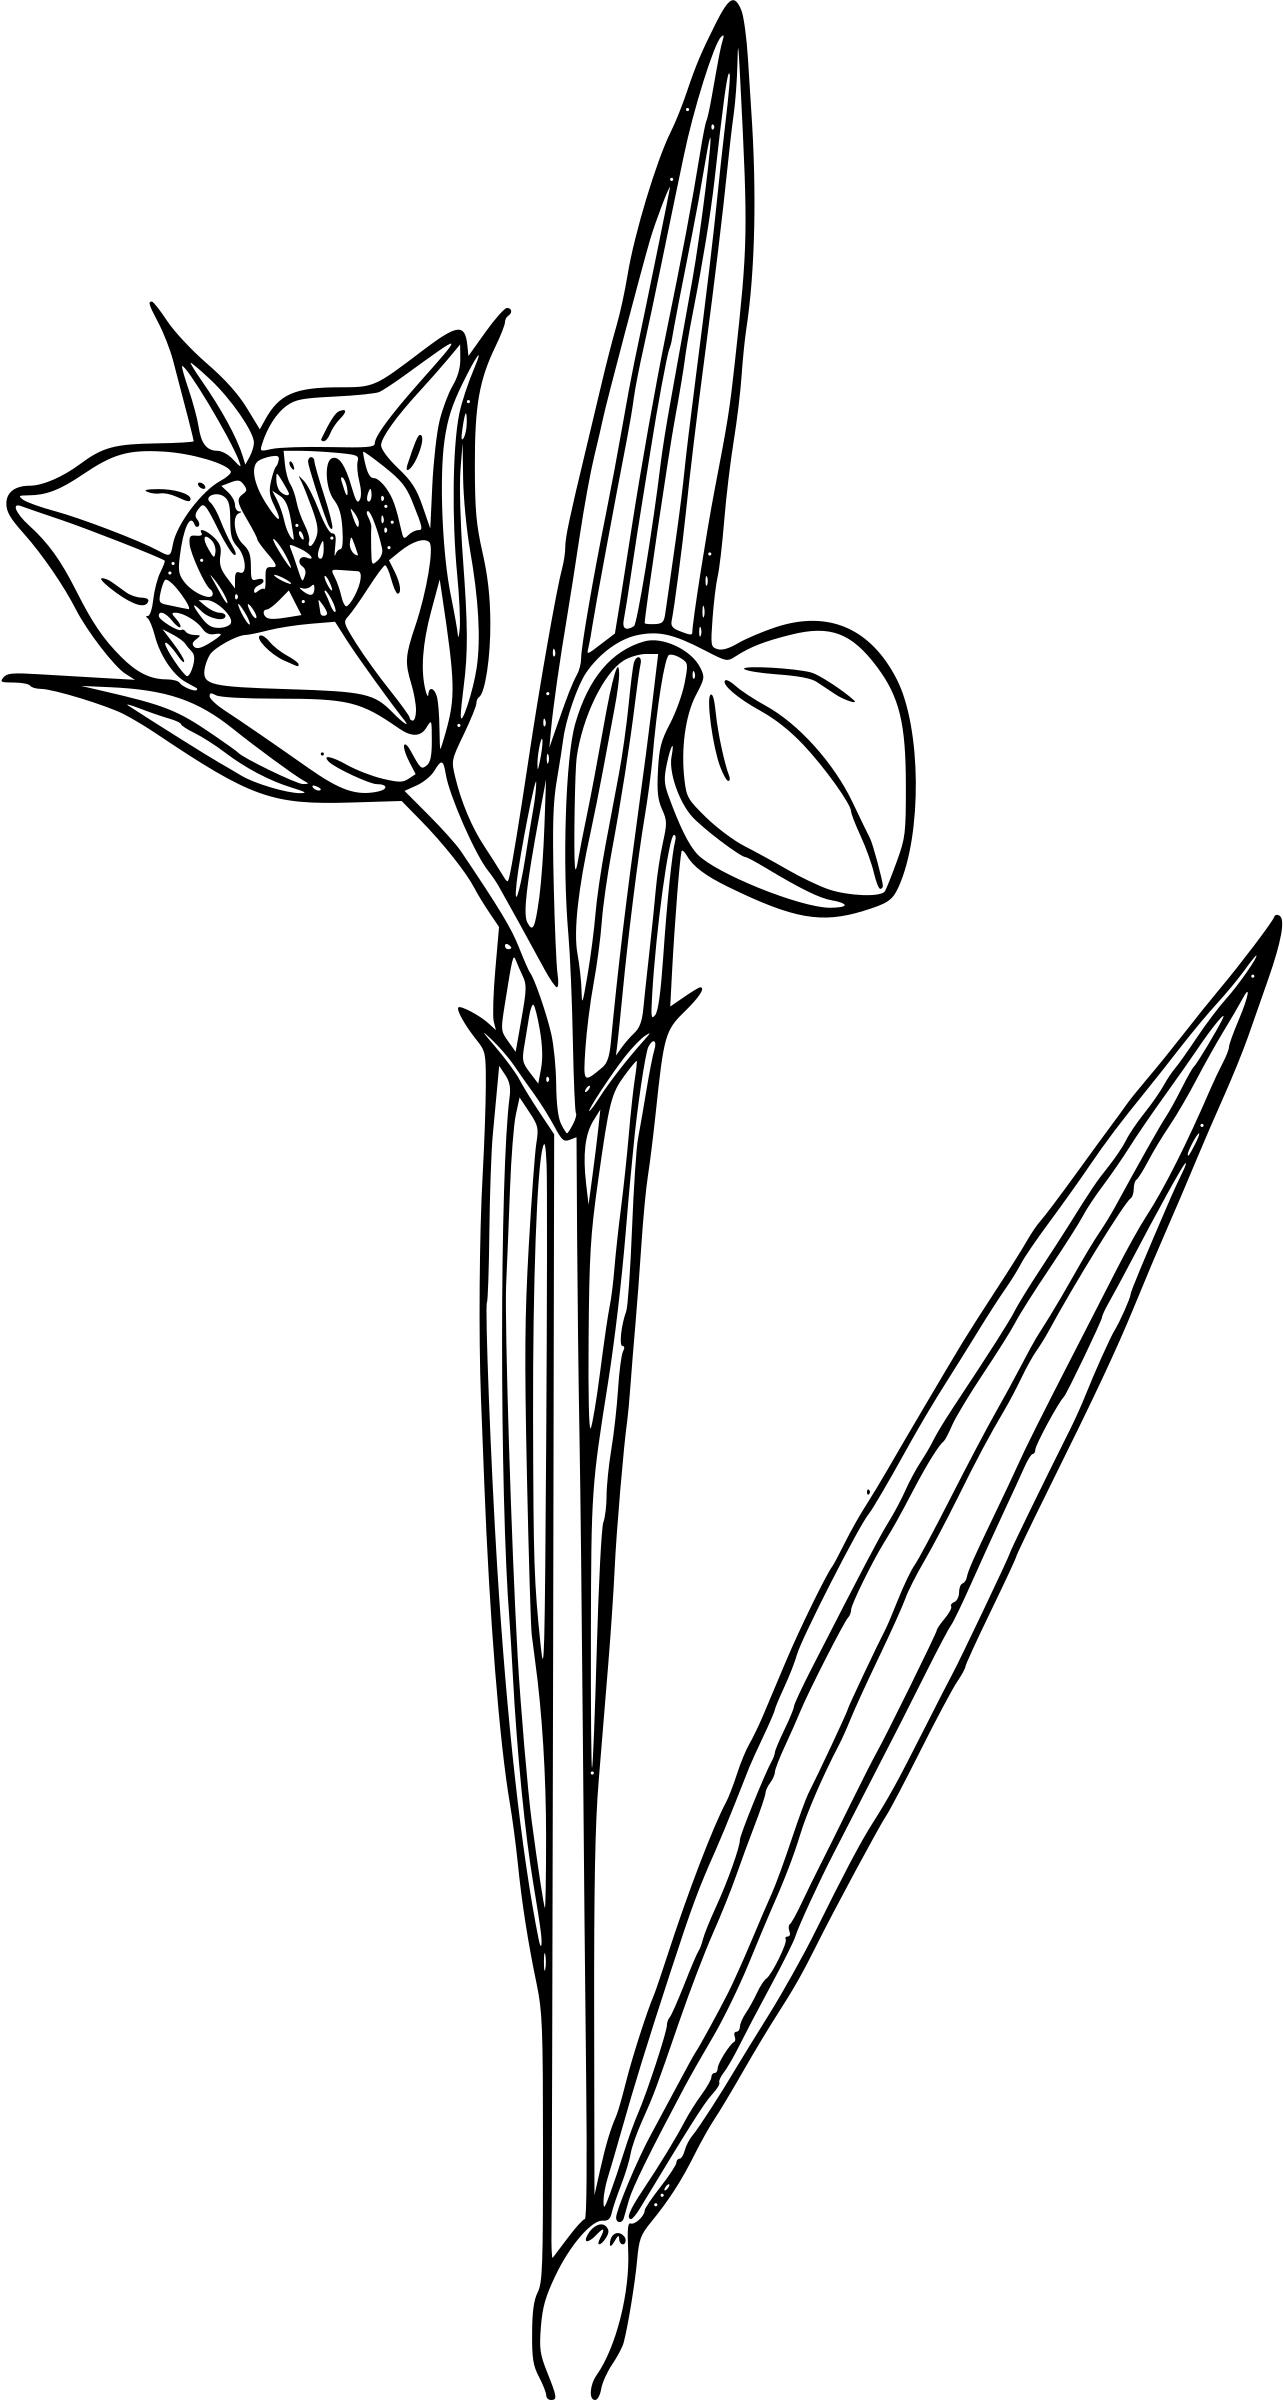 Mariposa lily png